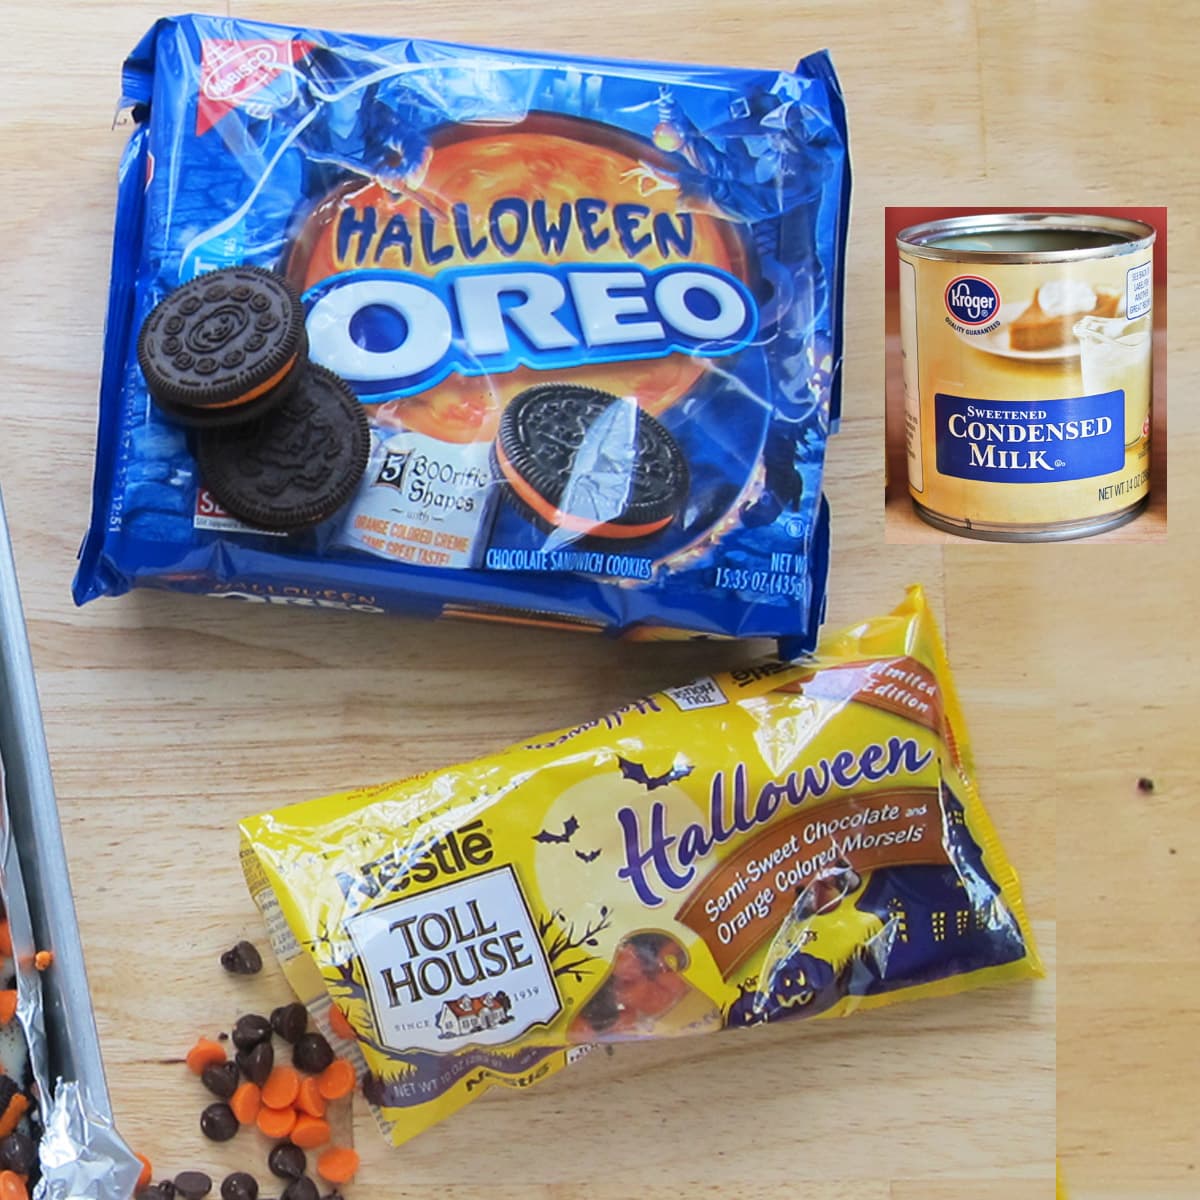 Halloween OREO Cookies, Nestle Halloween Chocolate Chips, and sweetened condensed milk.